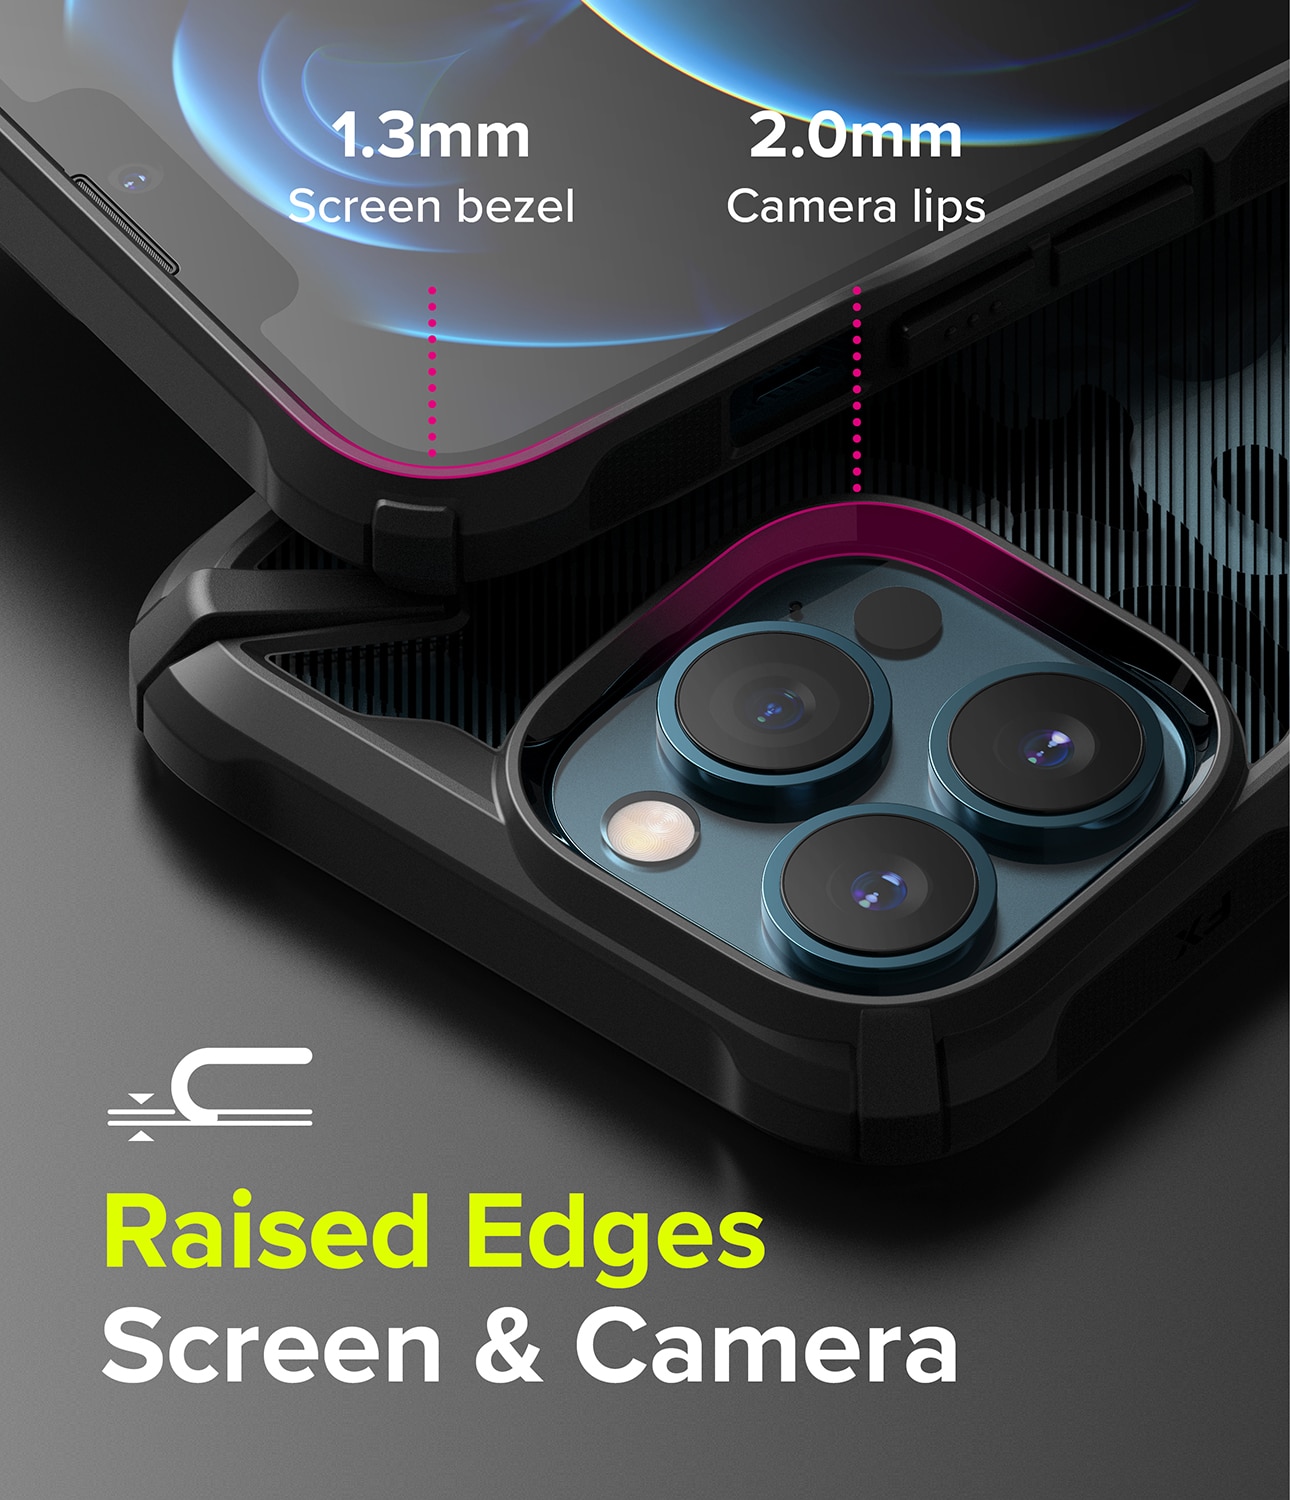 Fusion X Design Case iPhone 13 Pro Max Camo Black